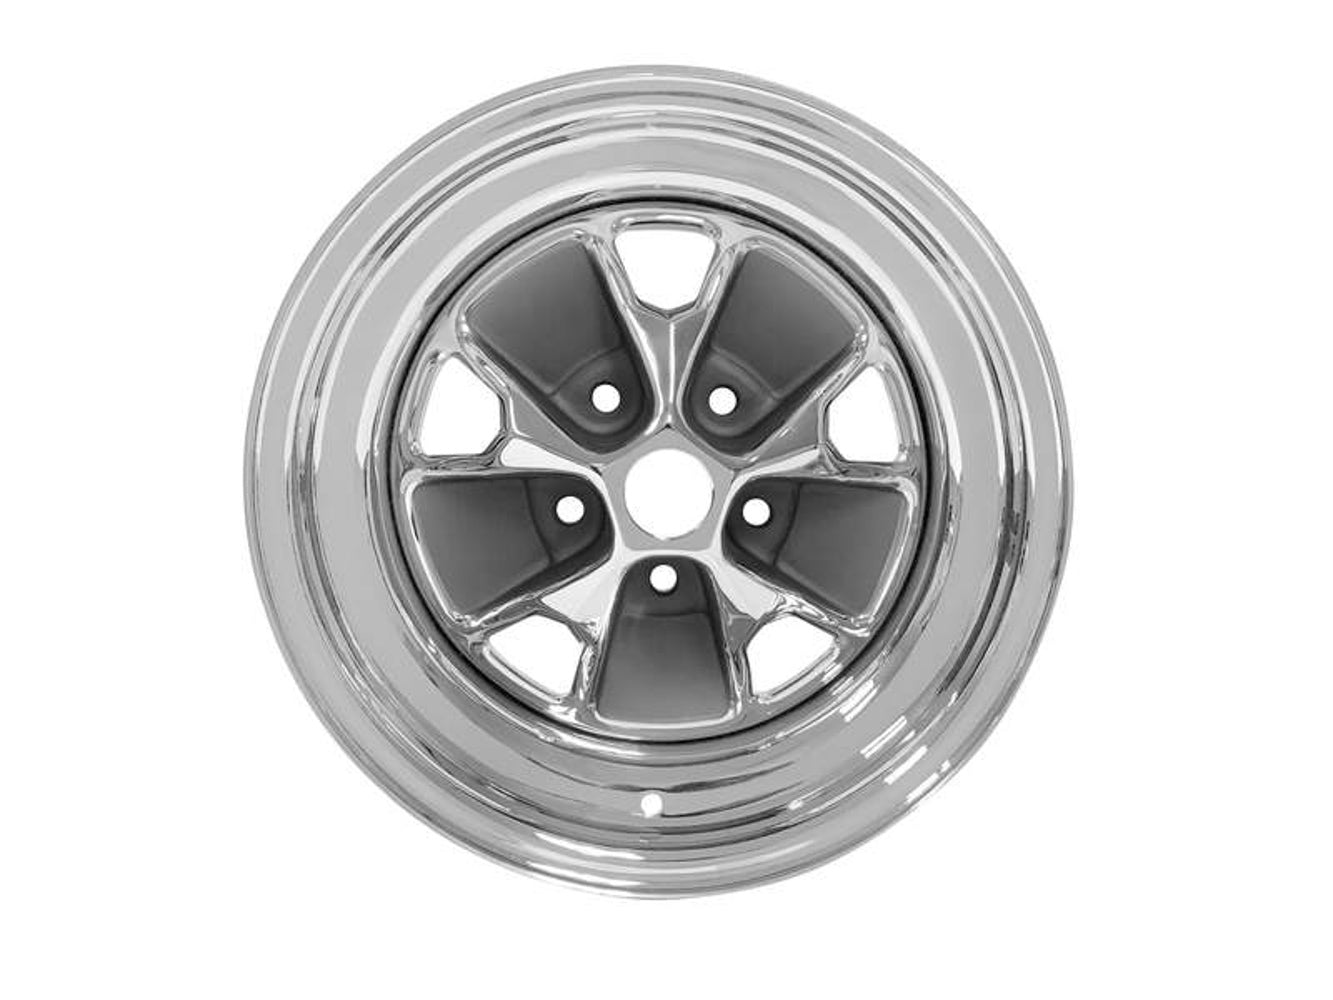 Drake Automotive Group 15 x 7 Mustang Styled Steel Wheel Chrome DRAC5ZZ-1007-CR